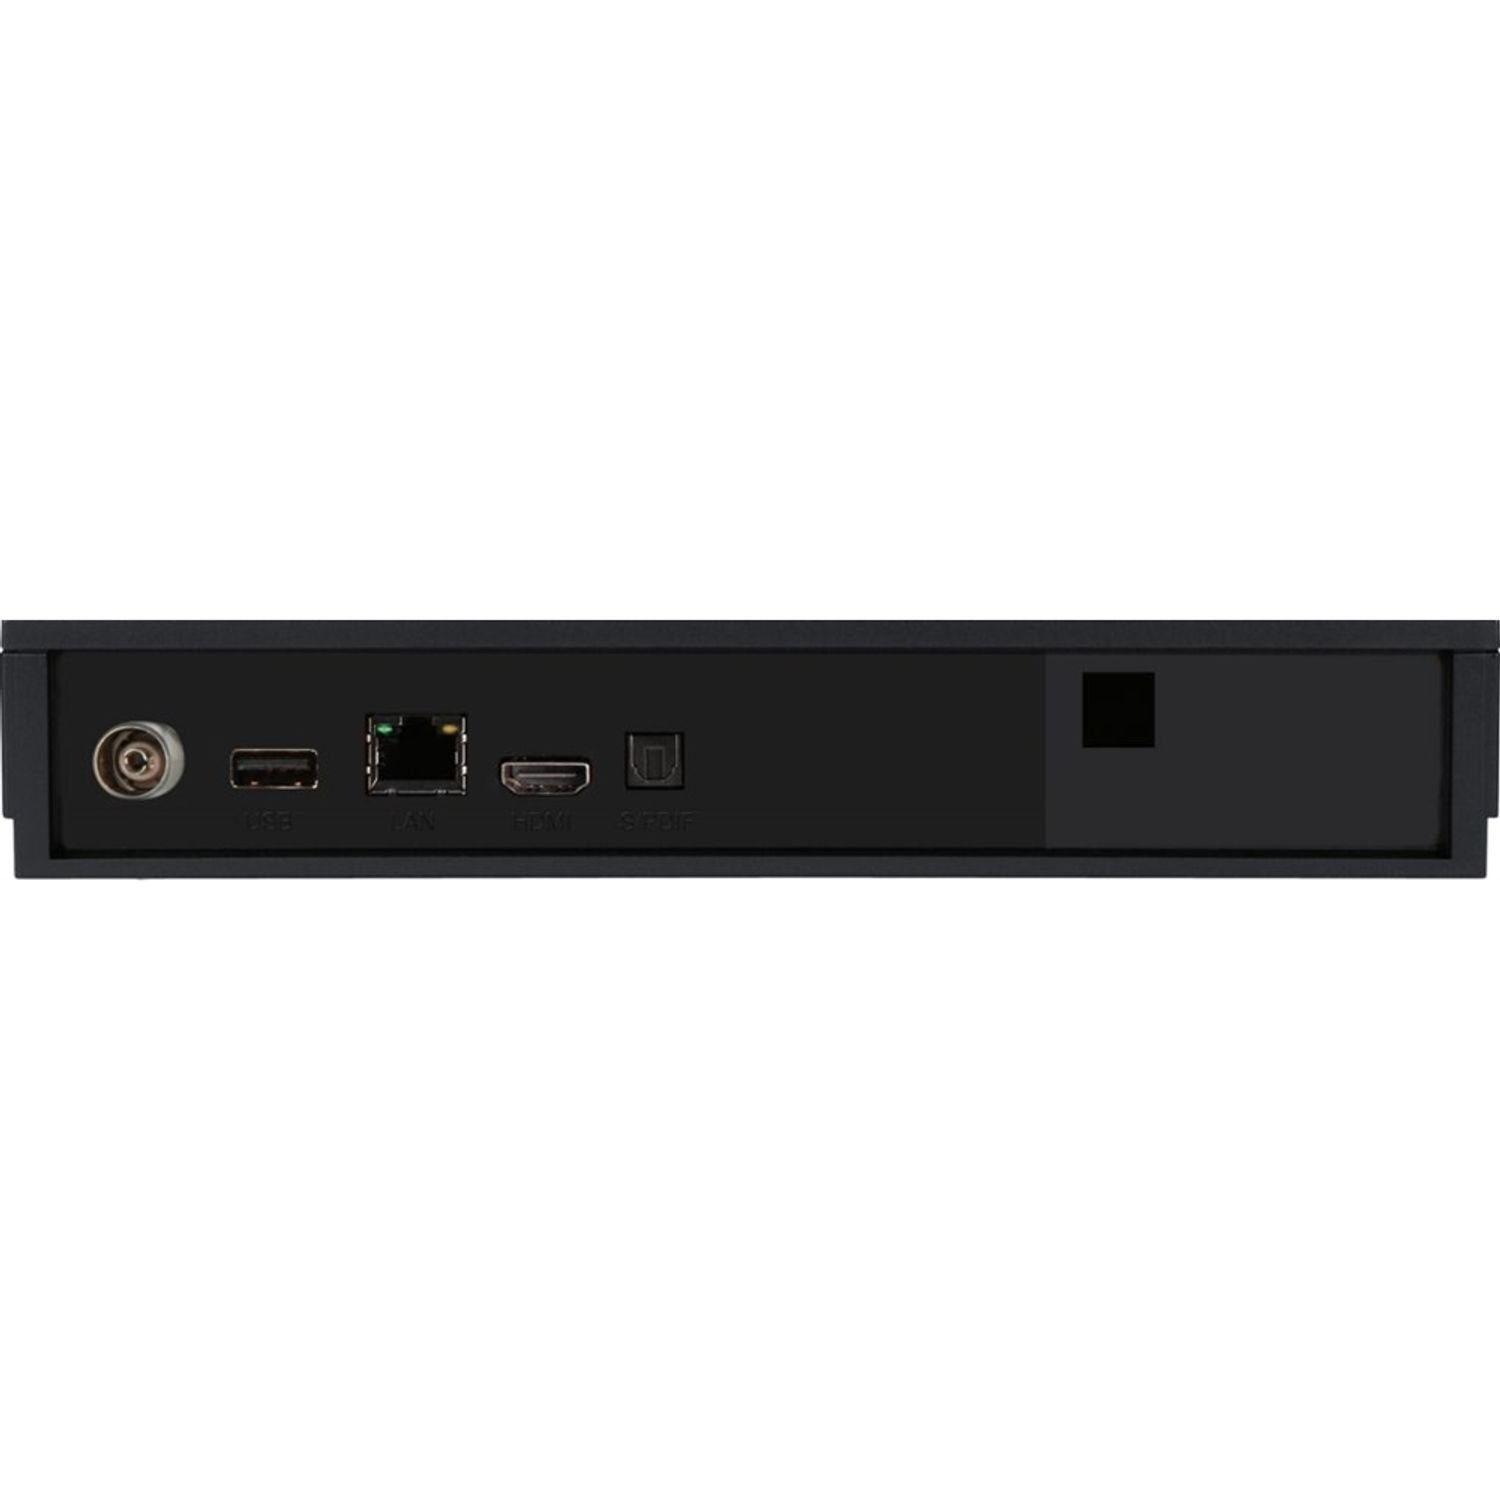 digiHD Kabel-Receiver Mediaplayerfunktion Receiver mit DVB-C/DVB-T2 TELESTAR Combo